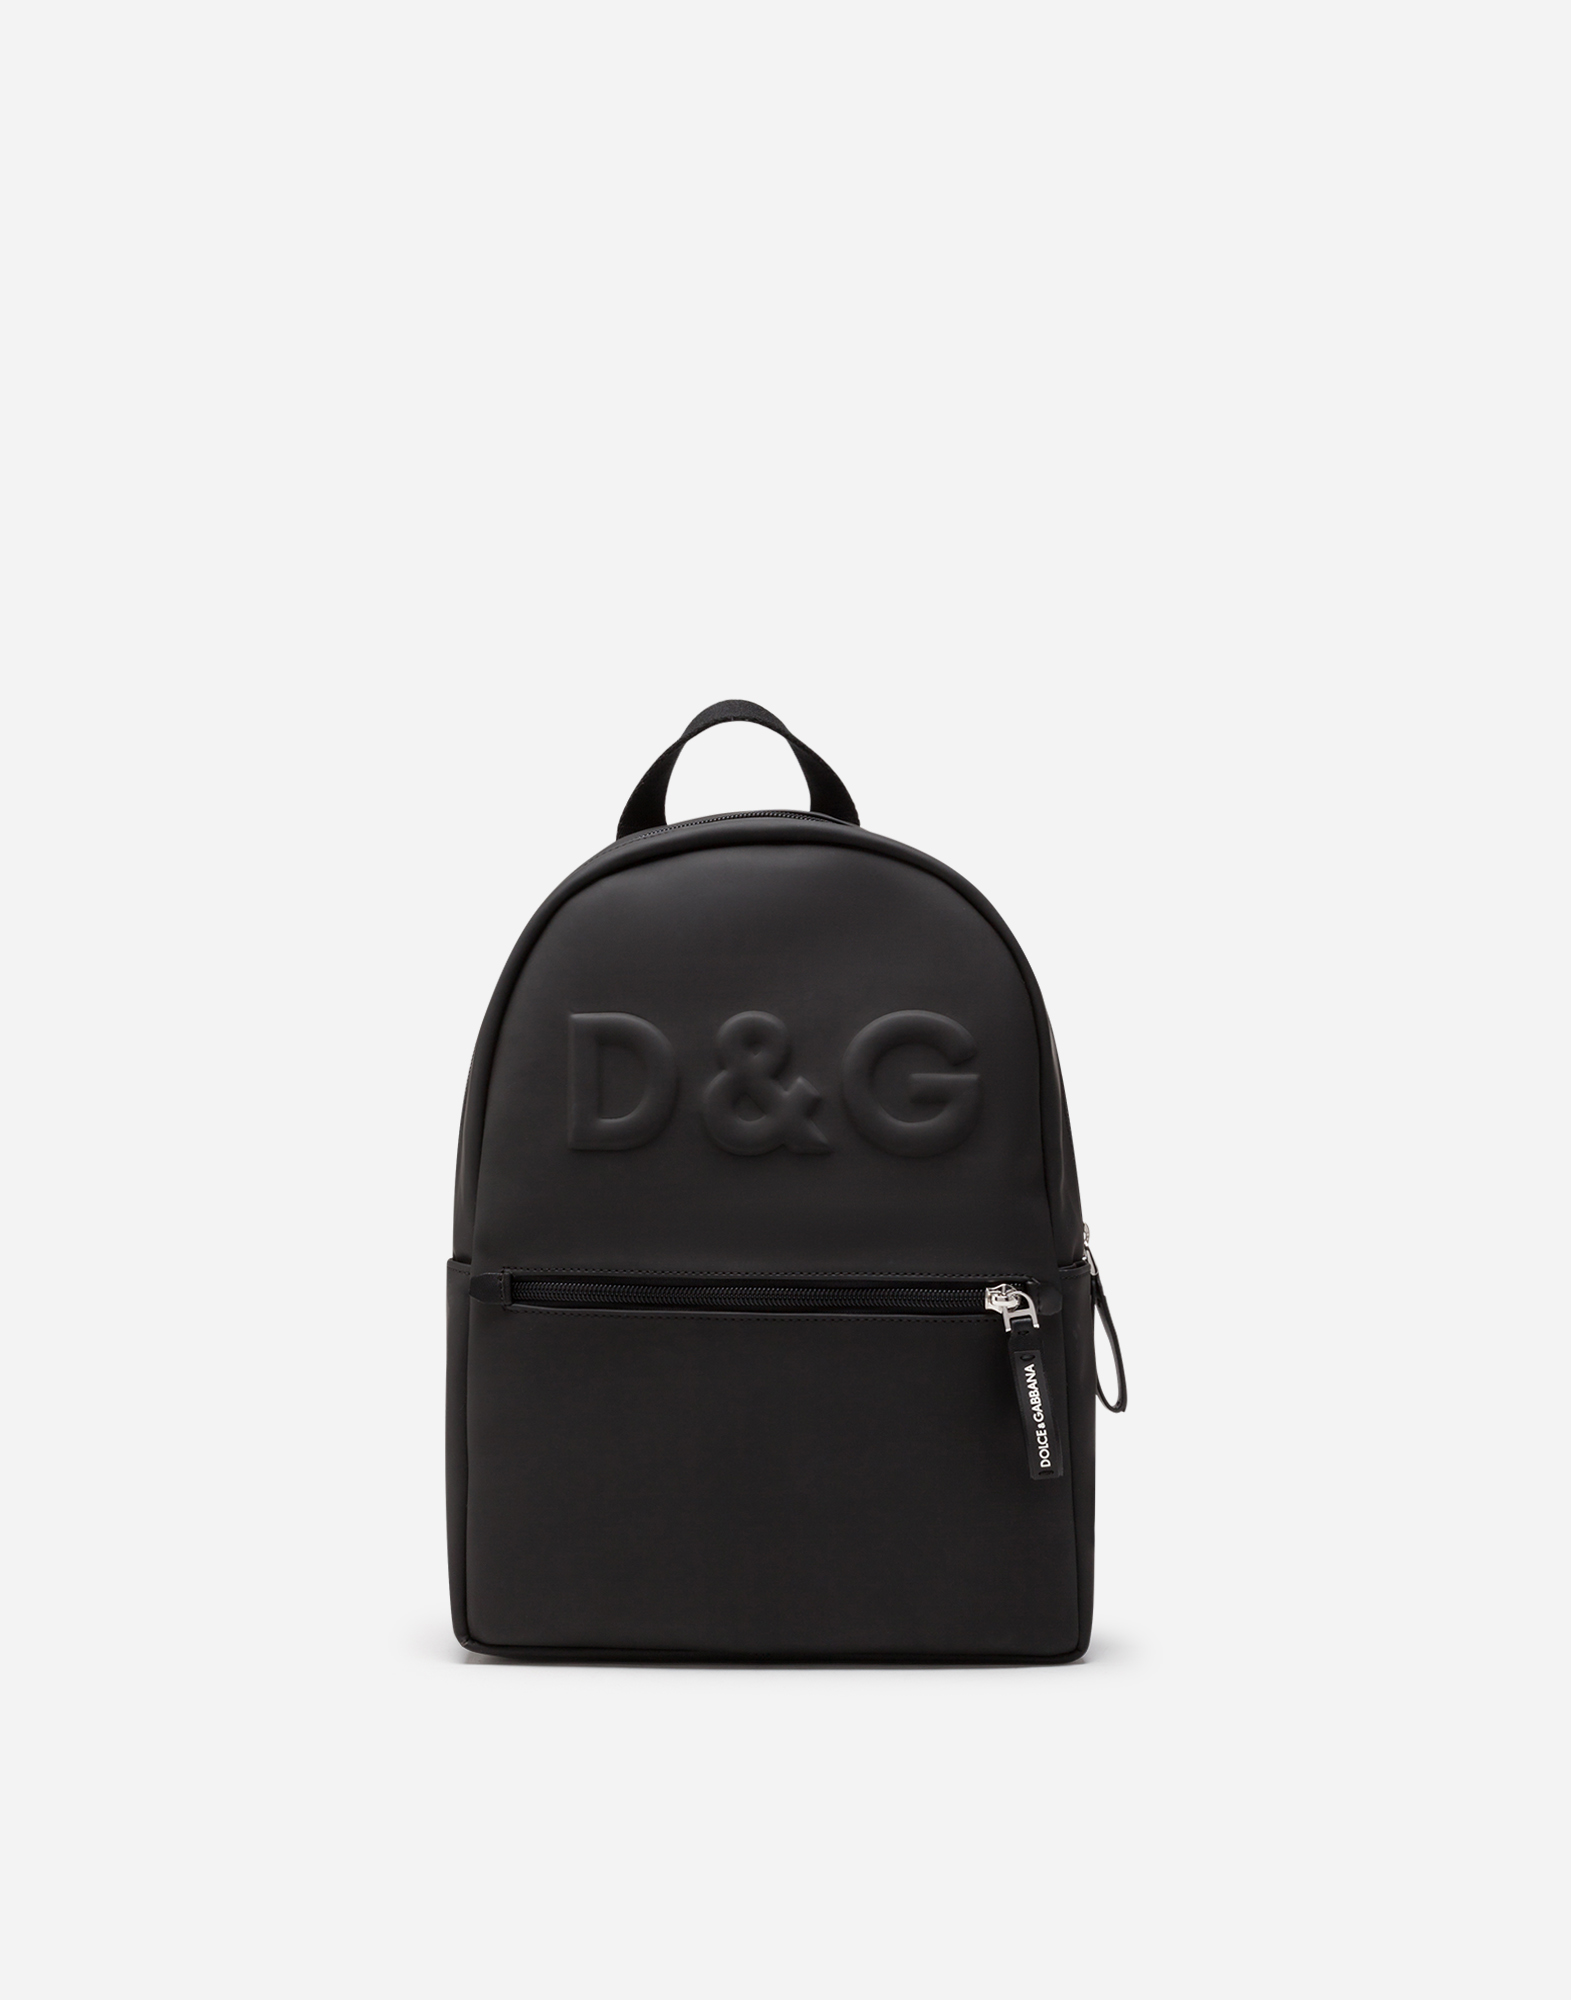 Dolce & Gabbana Neoprene Backpack With Heat-stamped Logo In Black